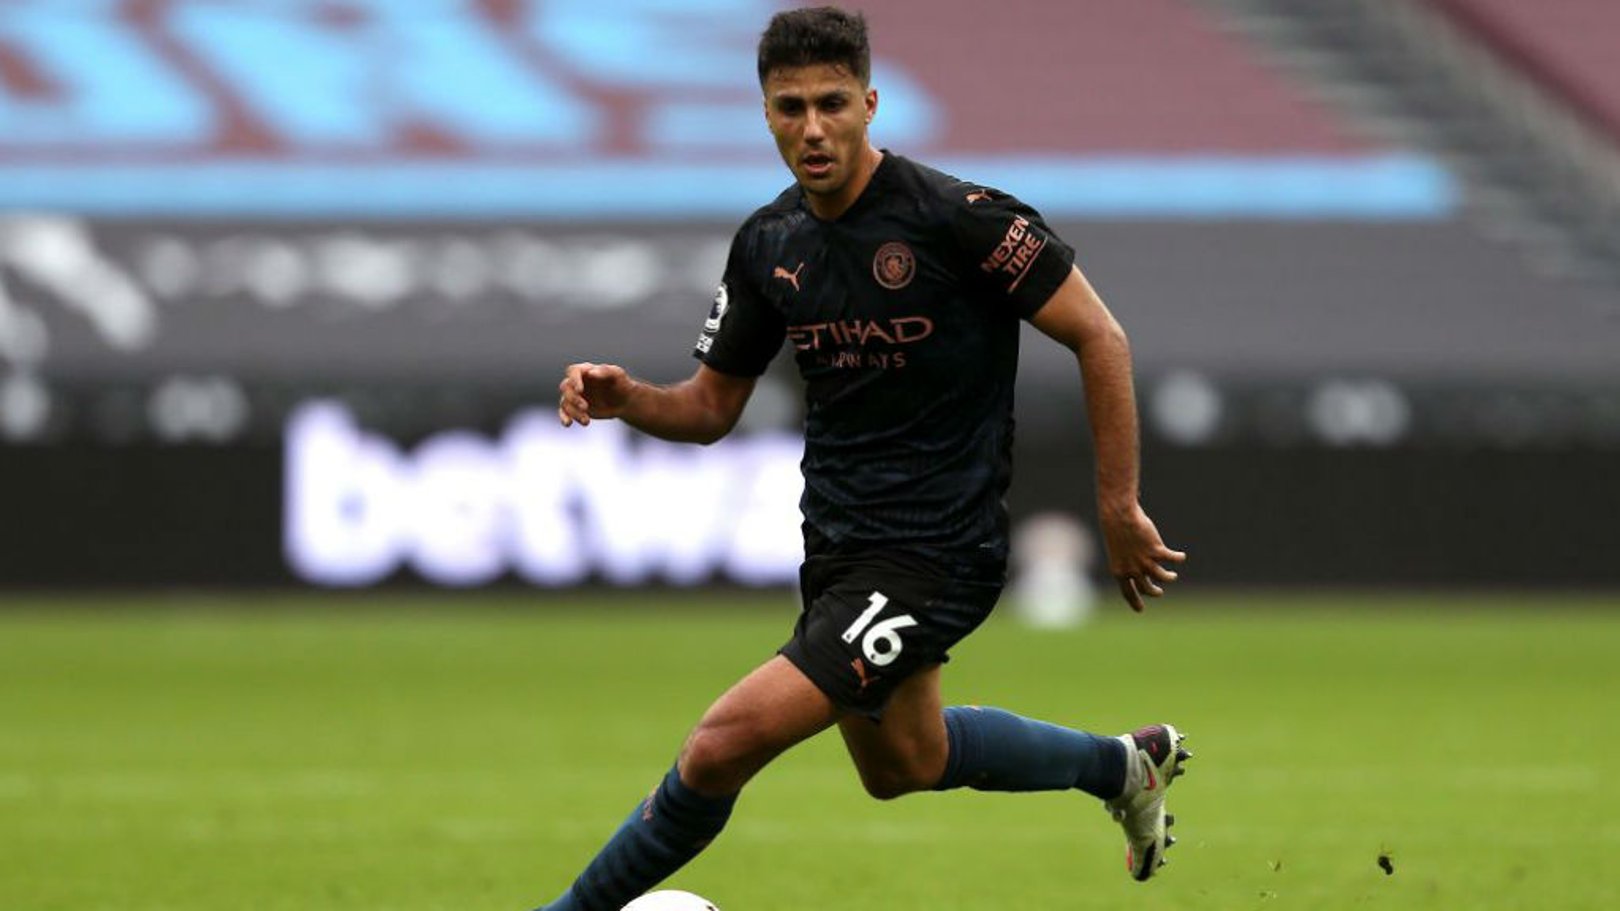 'Iron man' Rodrigo playing a crucial role for City